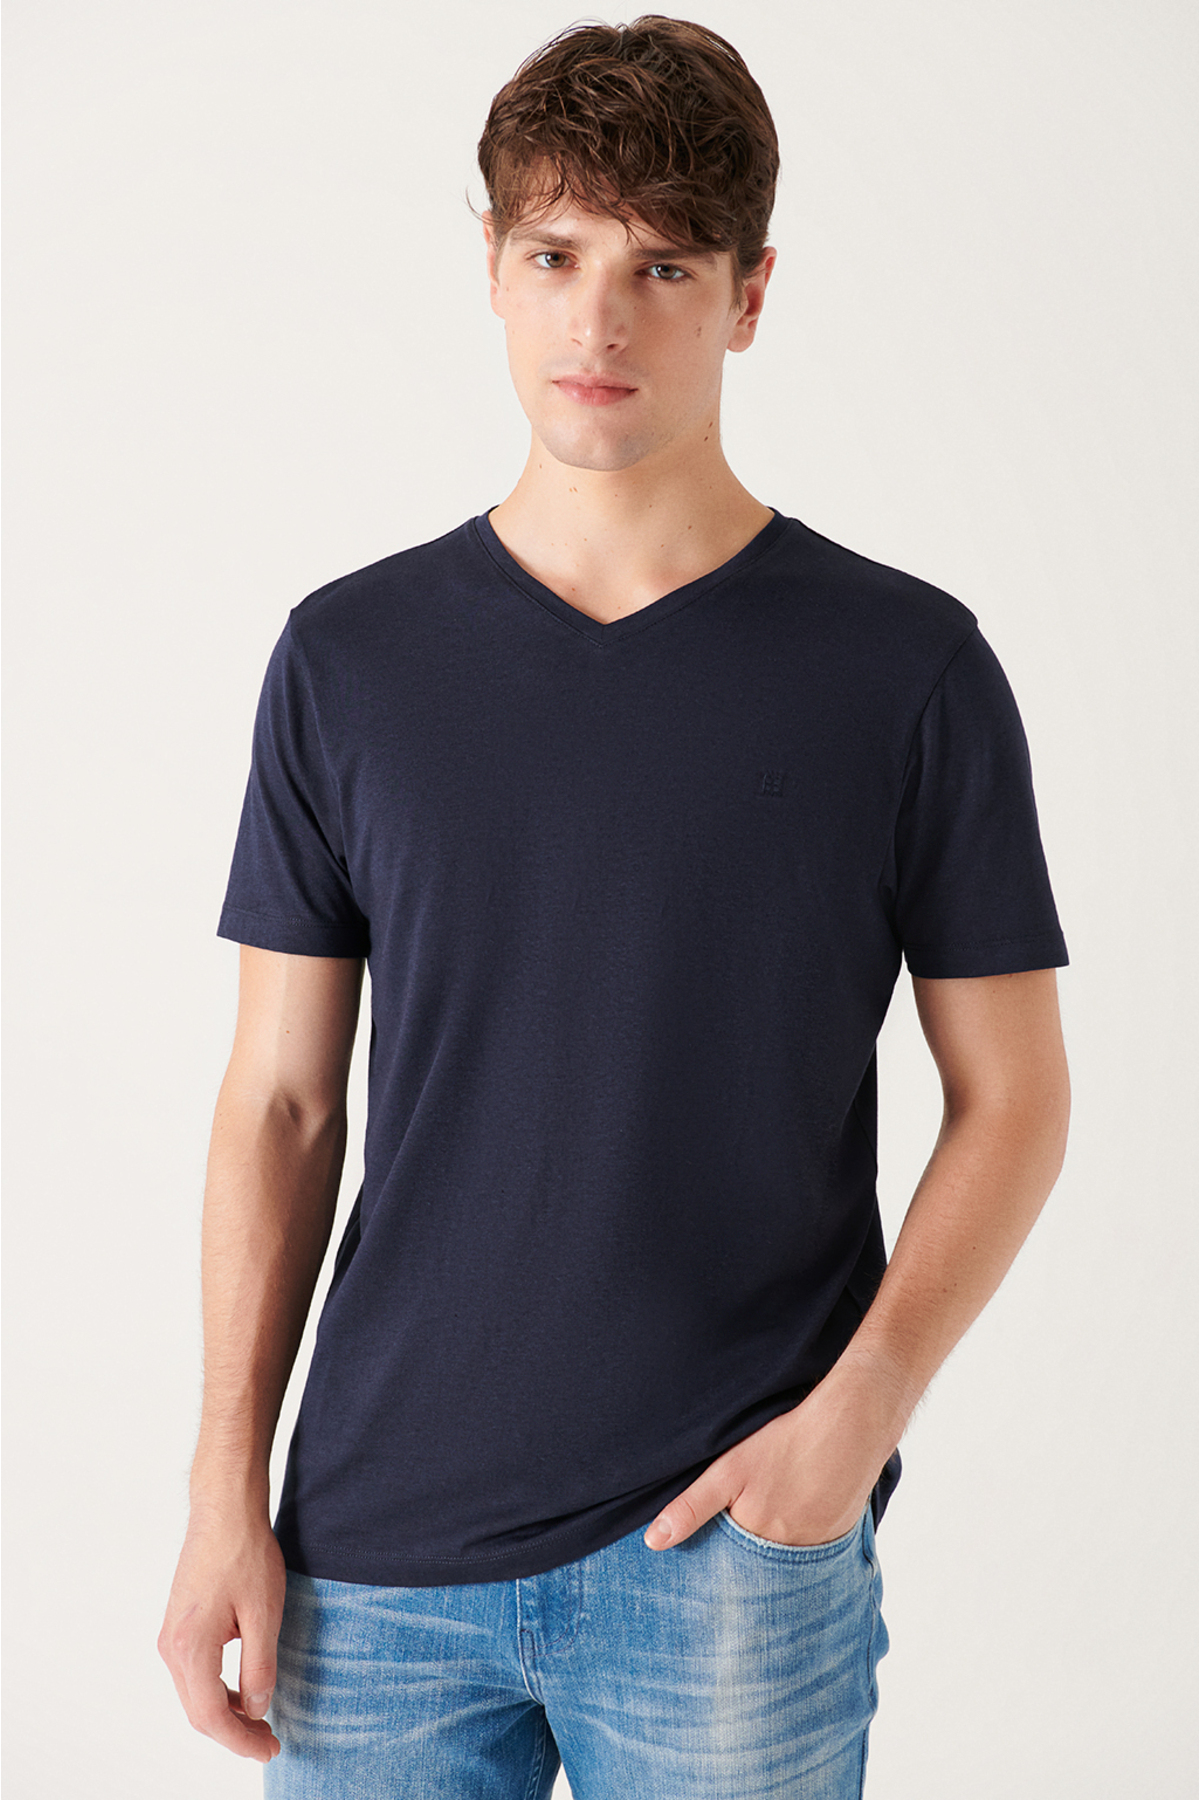 Avva Men's Navy Blue Ultrasoft V Neck Plain Standard Fit Normal Cut Modal T-shirt